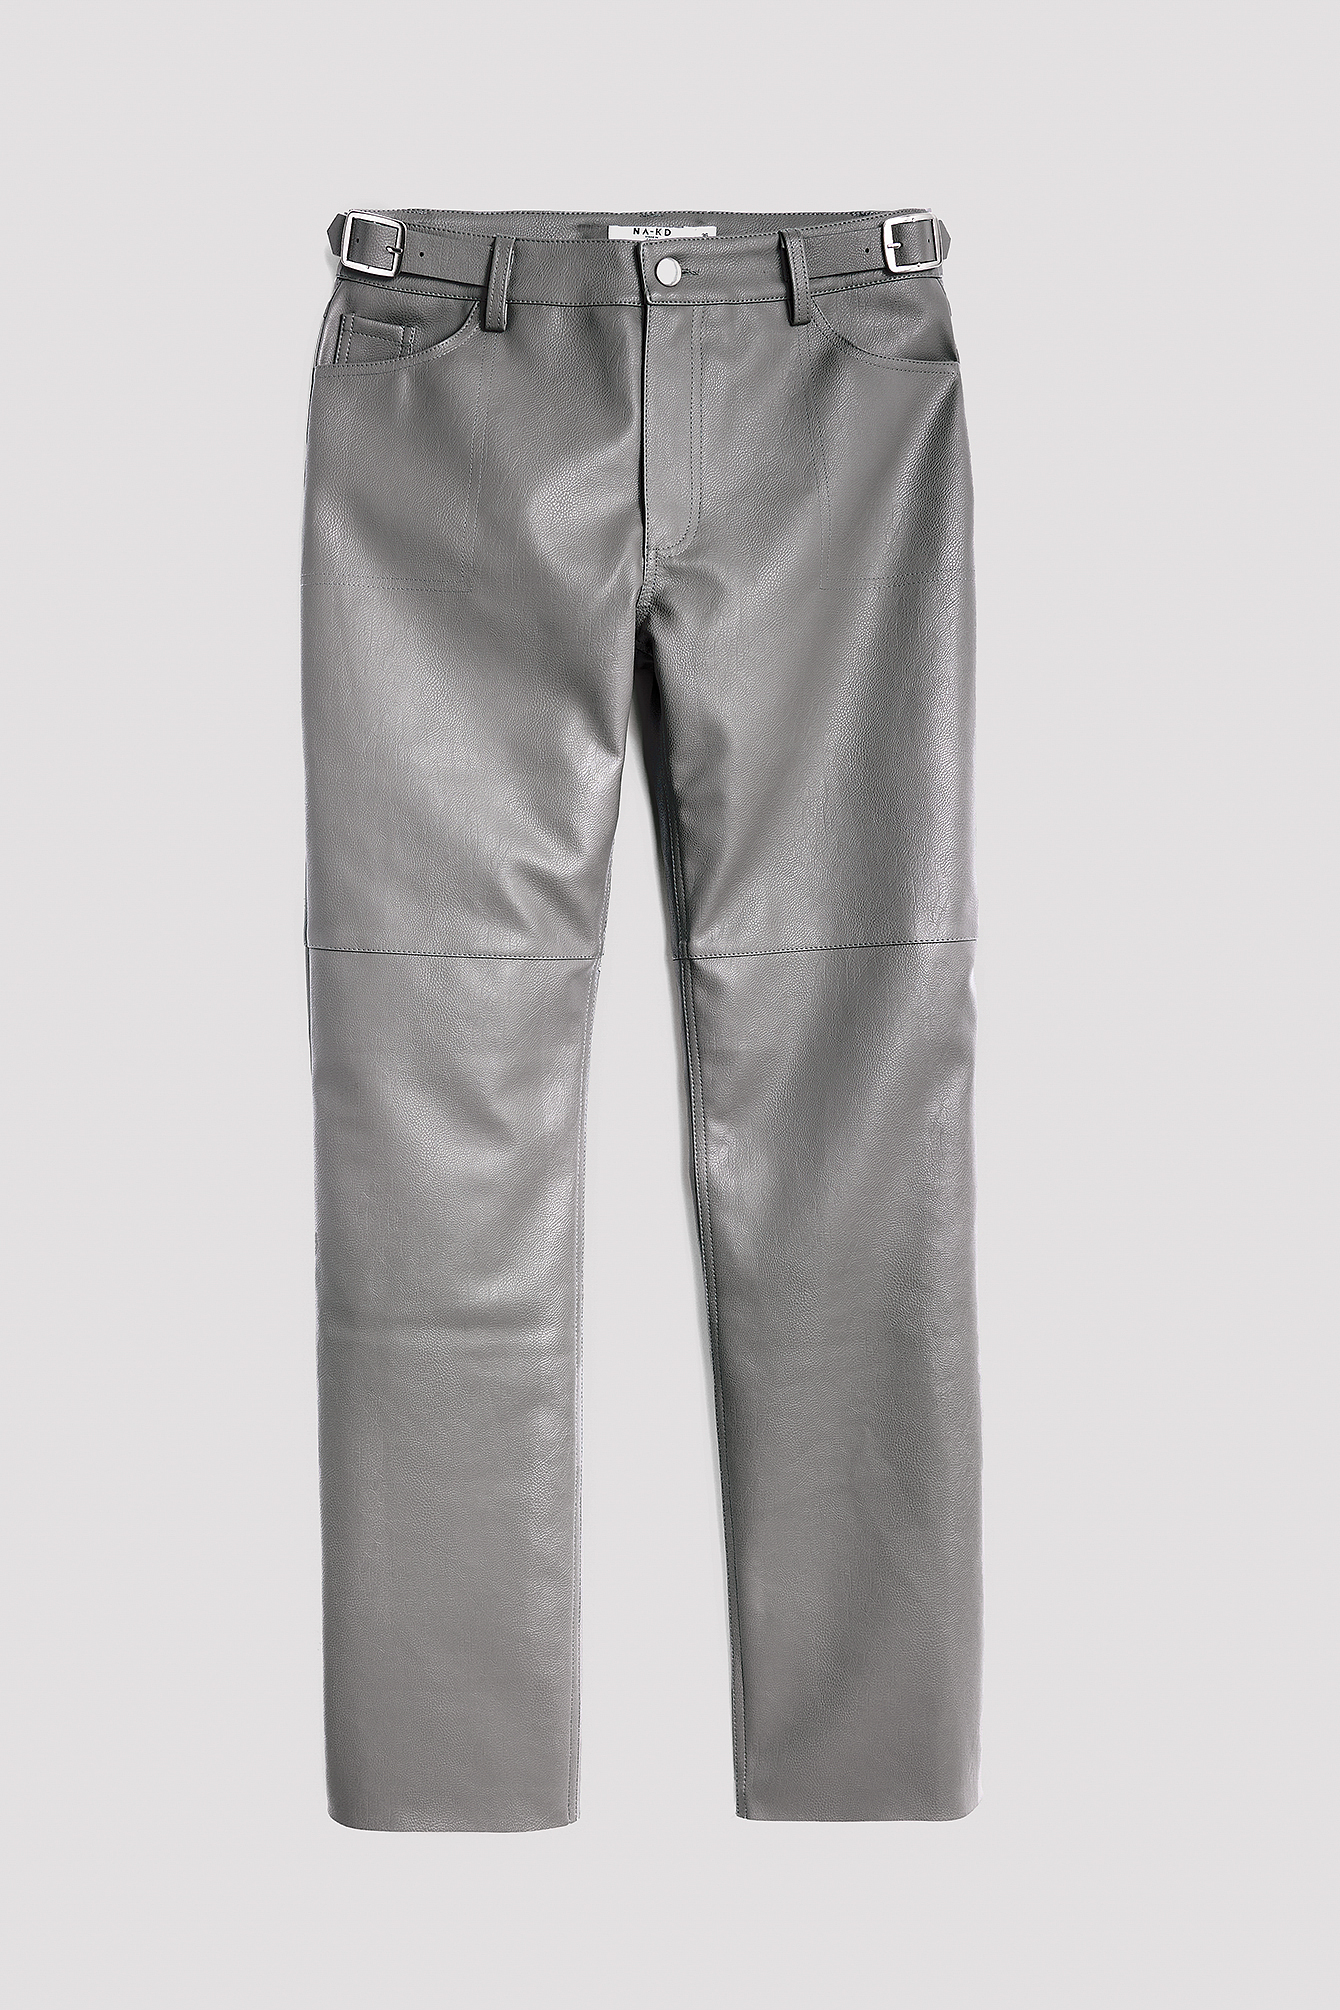 Grey PU bukser